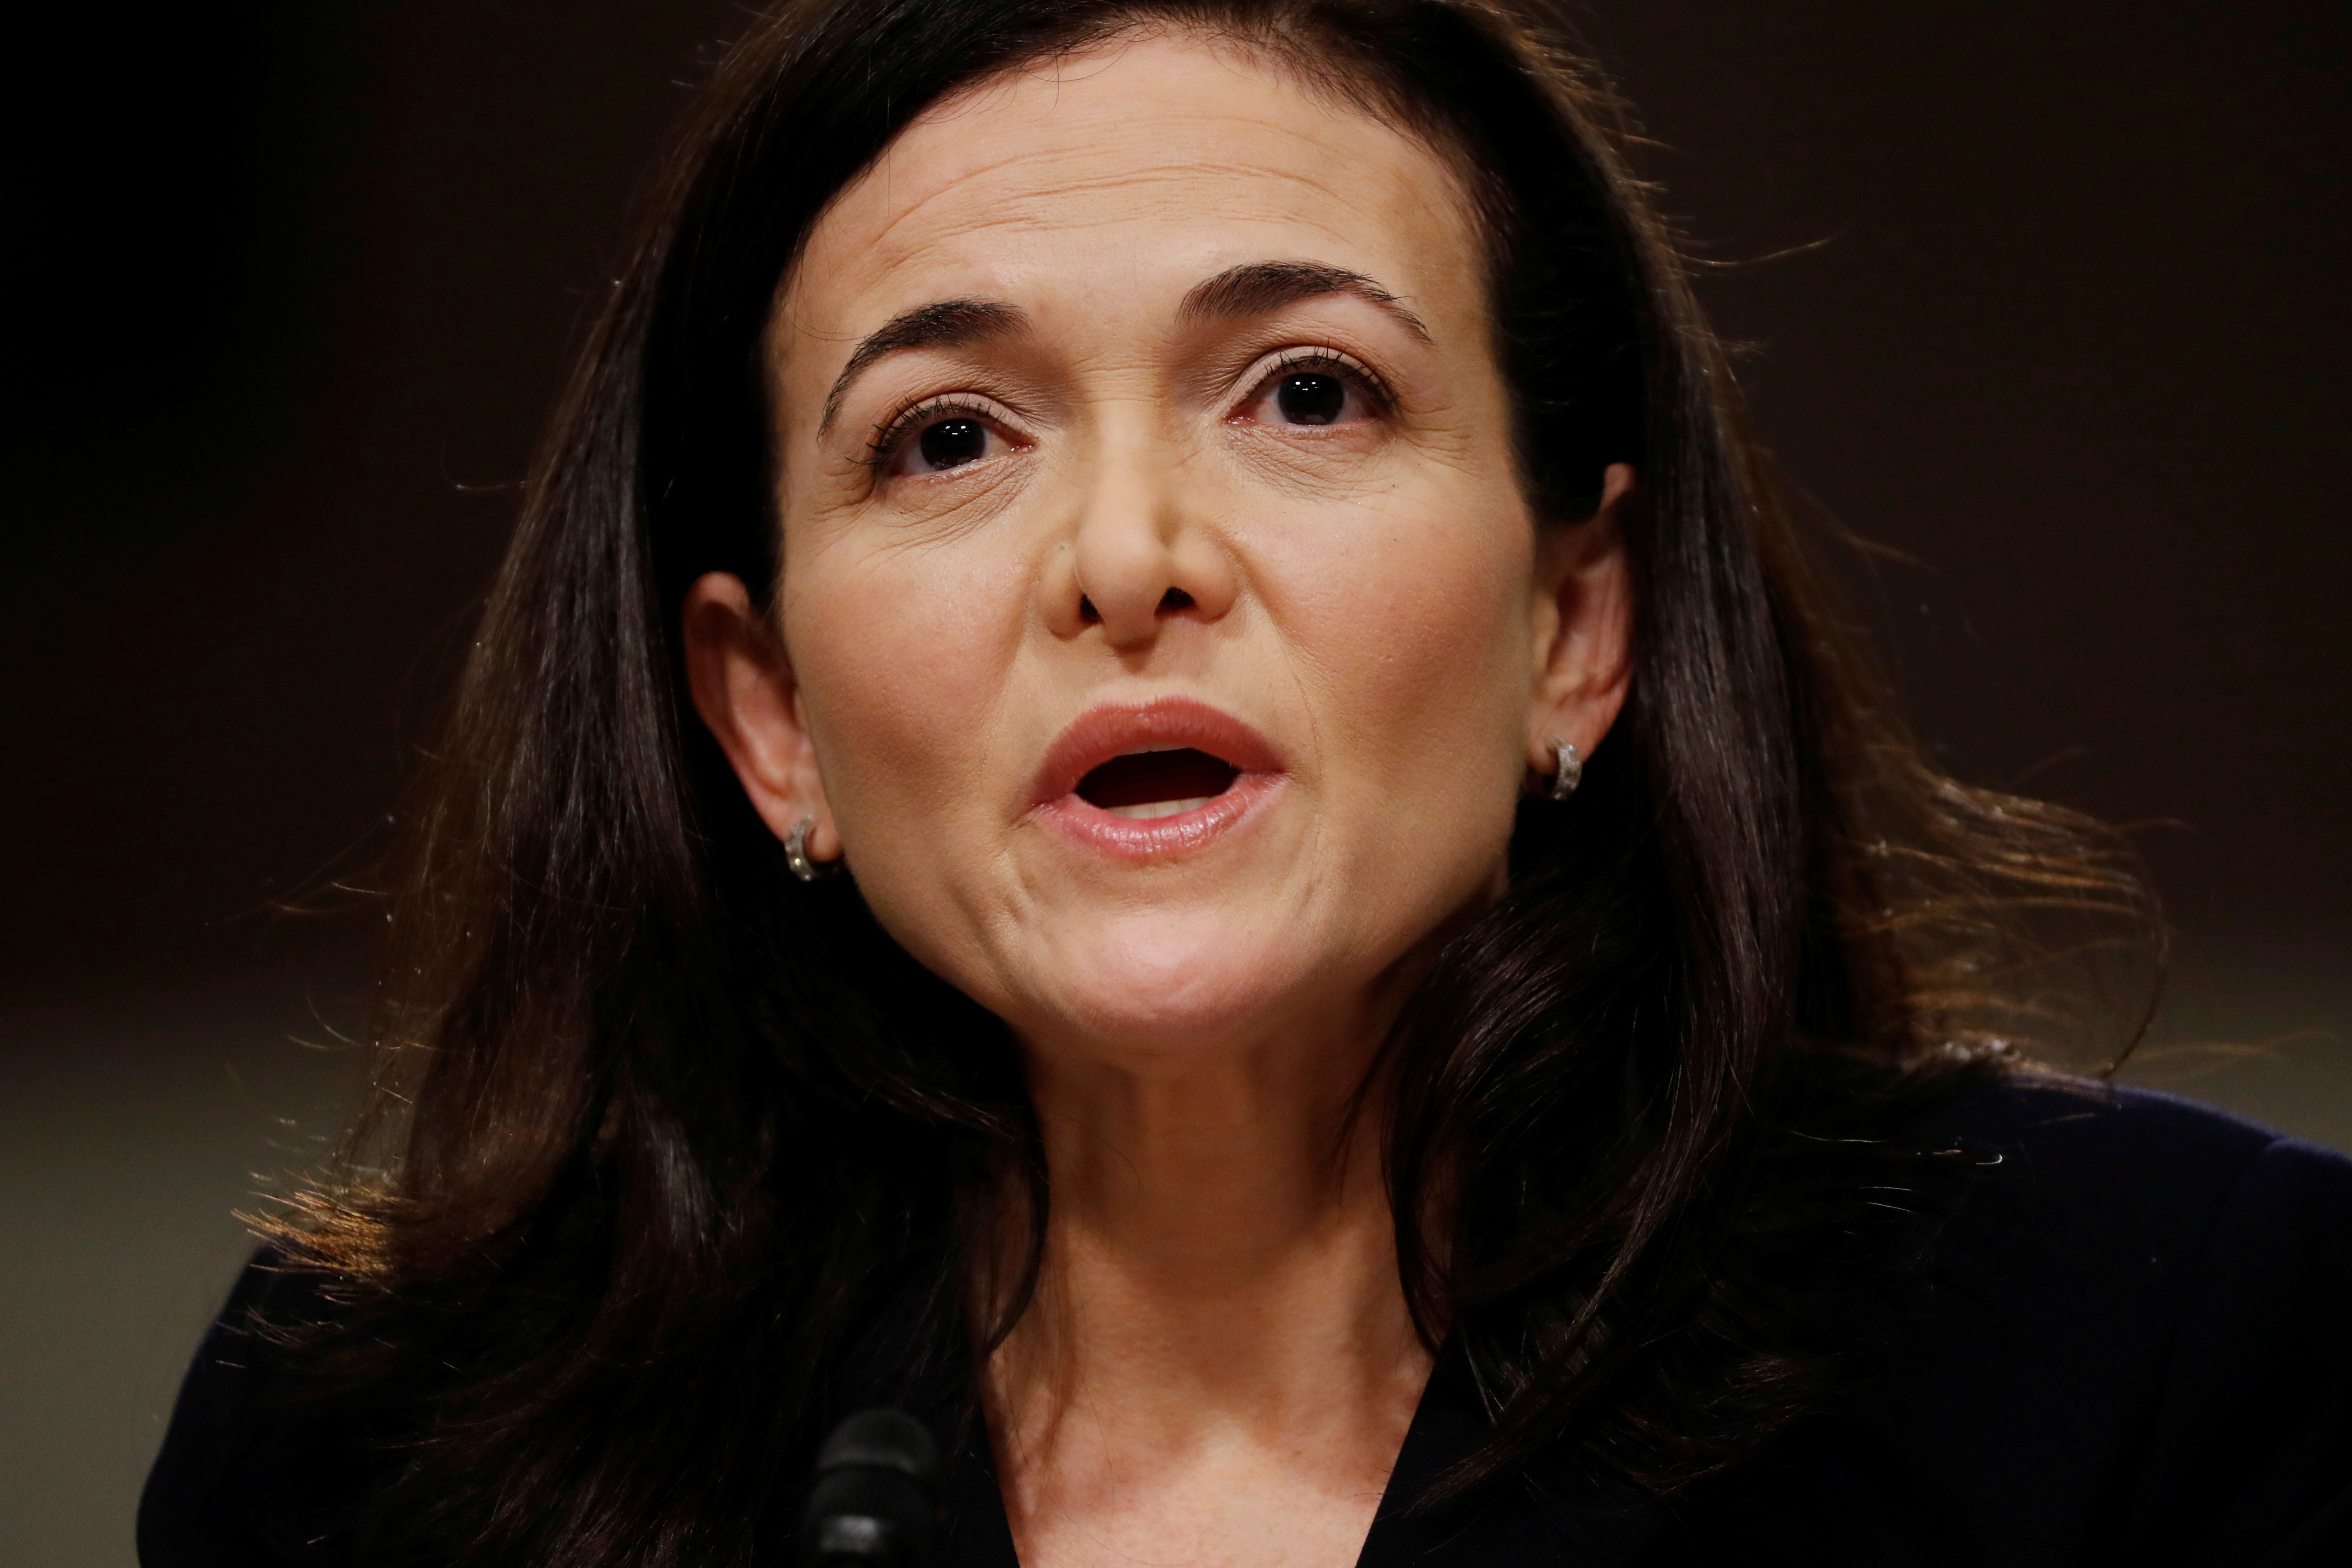 Meta probing Sheryl Sandberg's use of company resources, WSJ